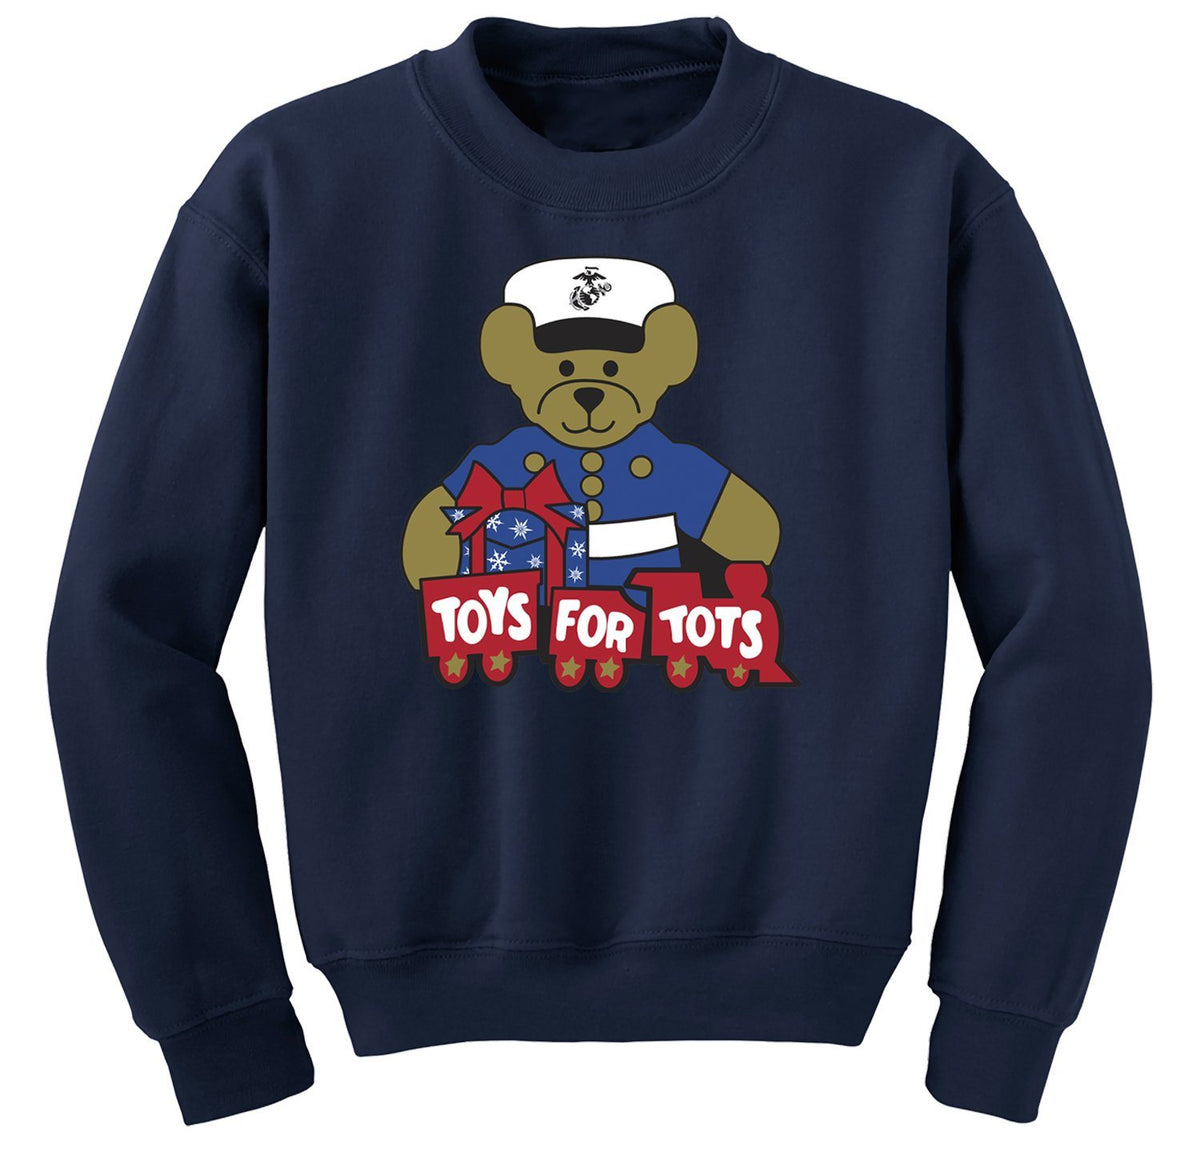 TFT Teddy Bear Sweatshirt TFT Sweatshirt/hoodie marinecorpsdirecttft S NAVY 